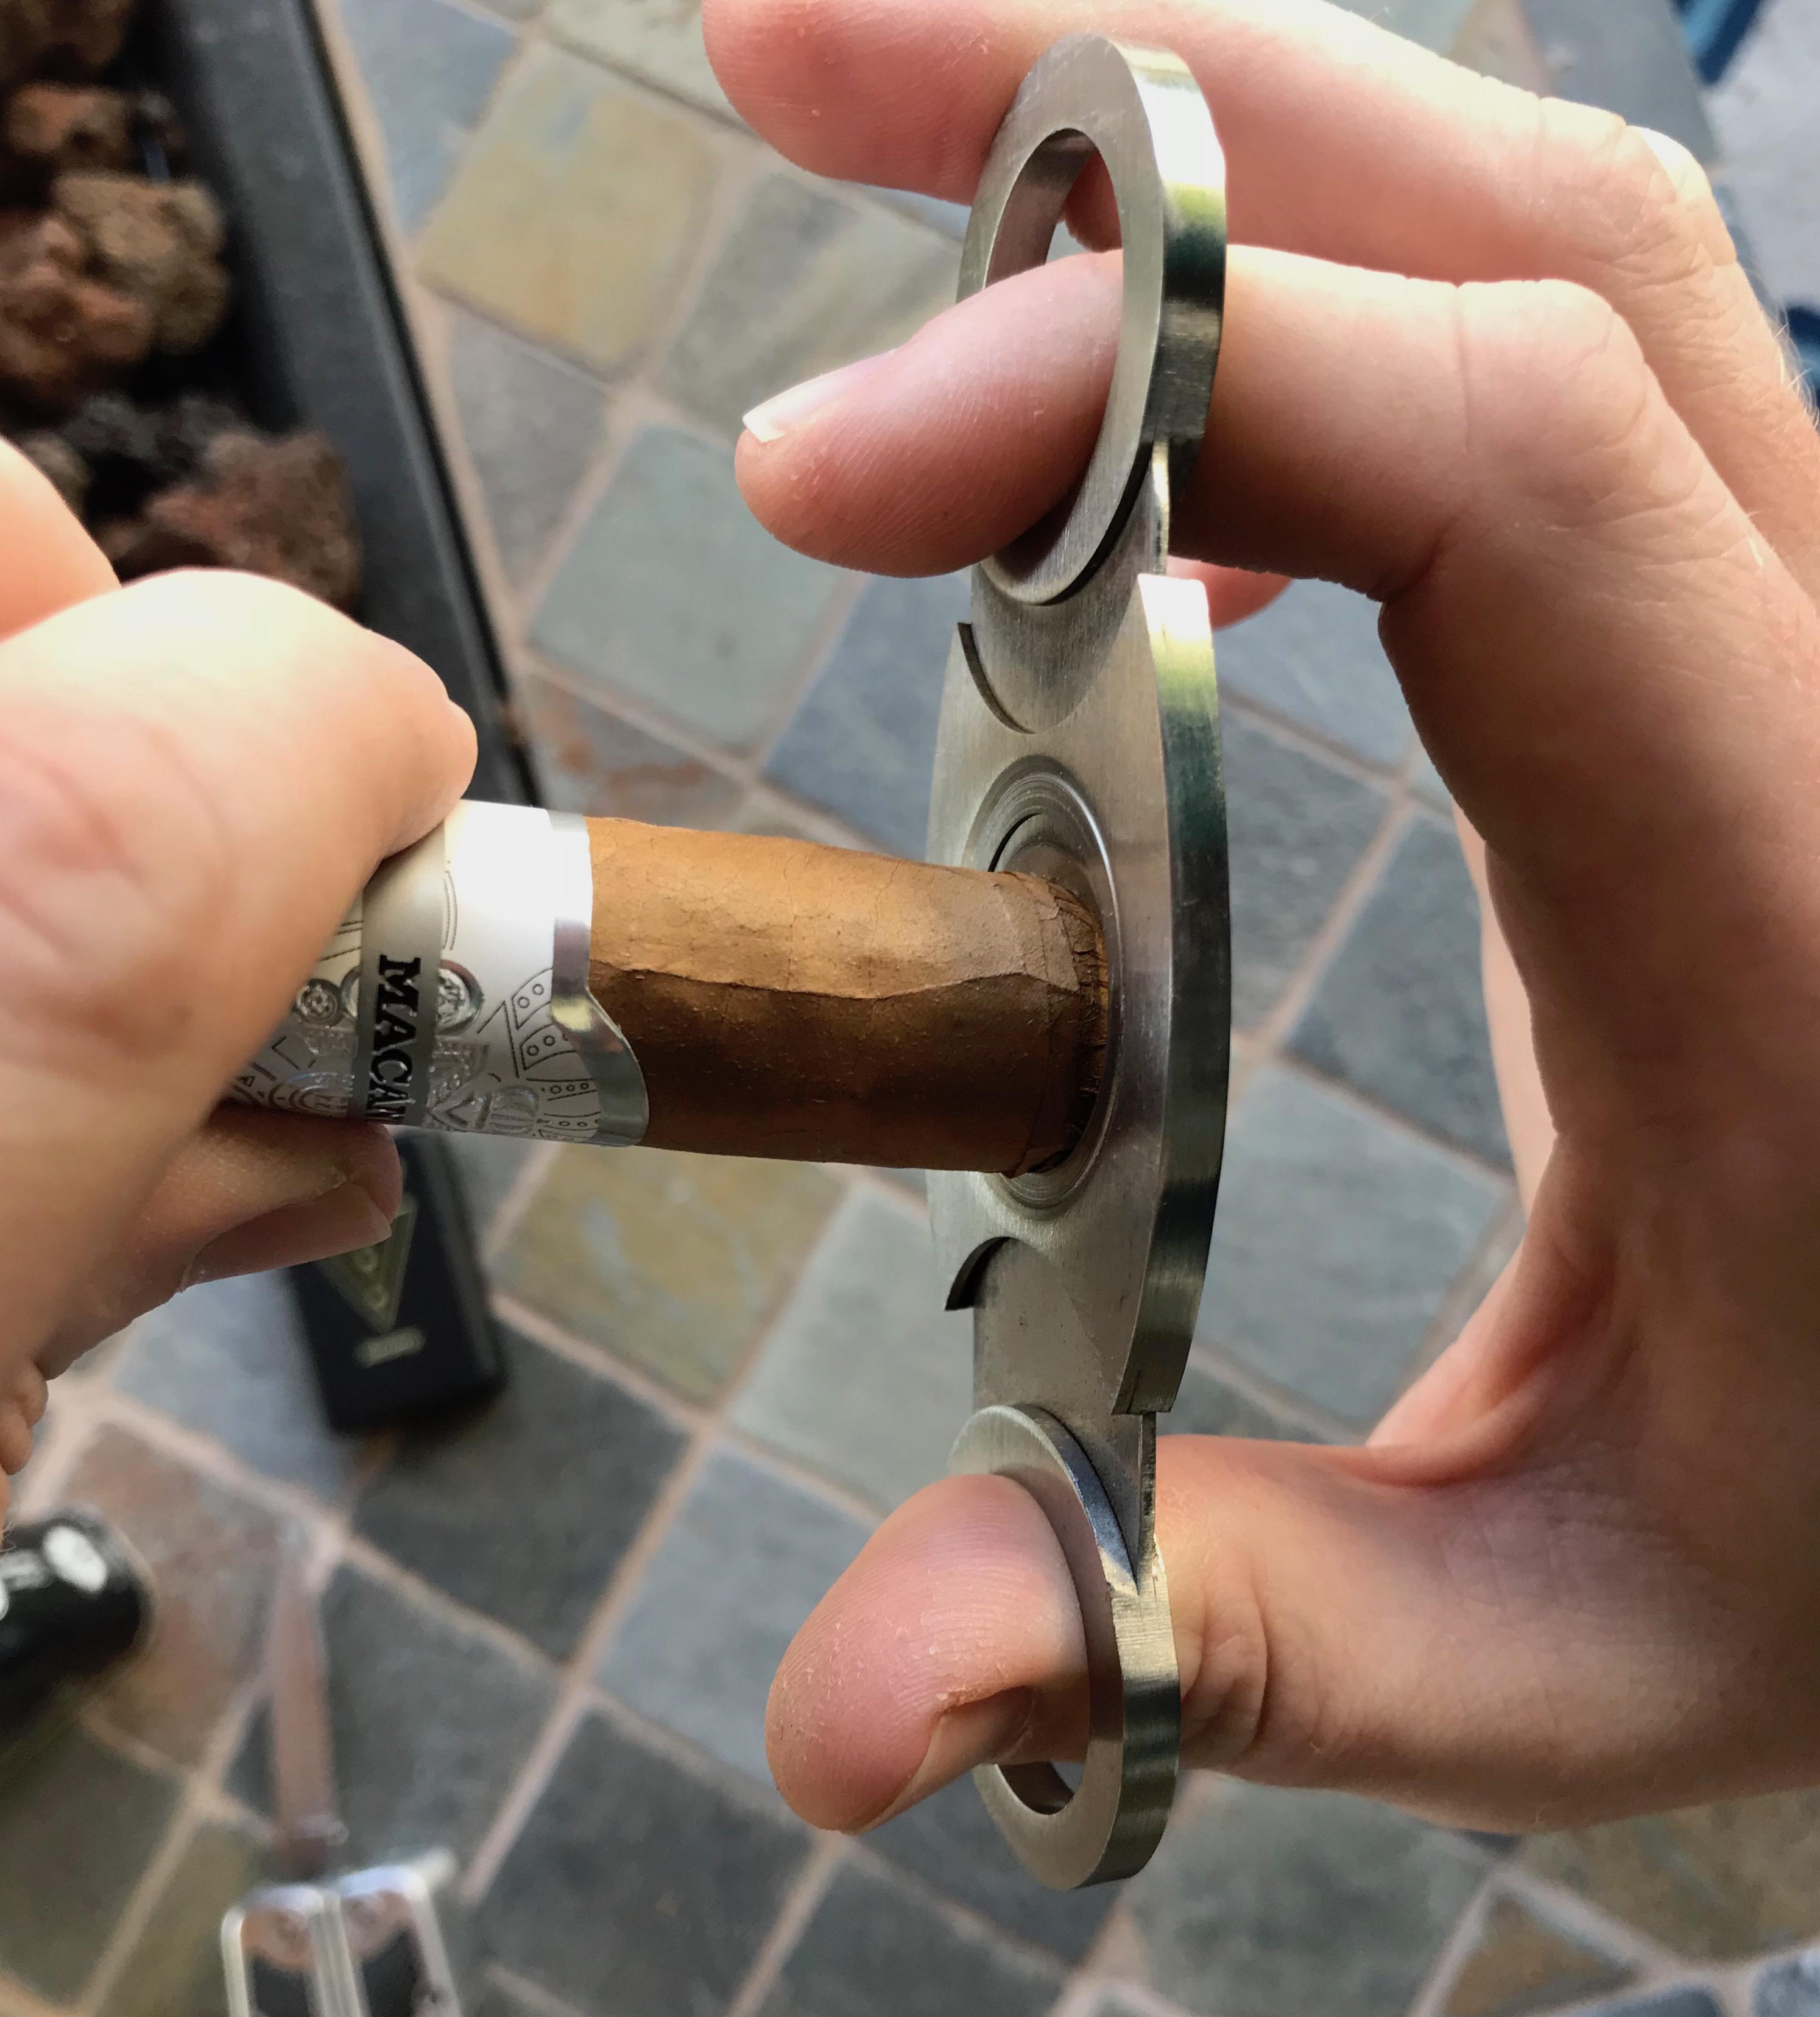 Cutting the cap of cigar.